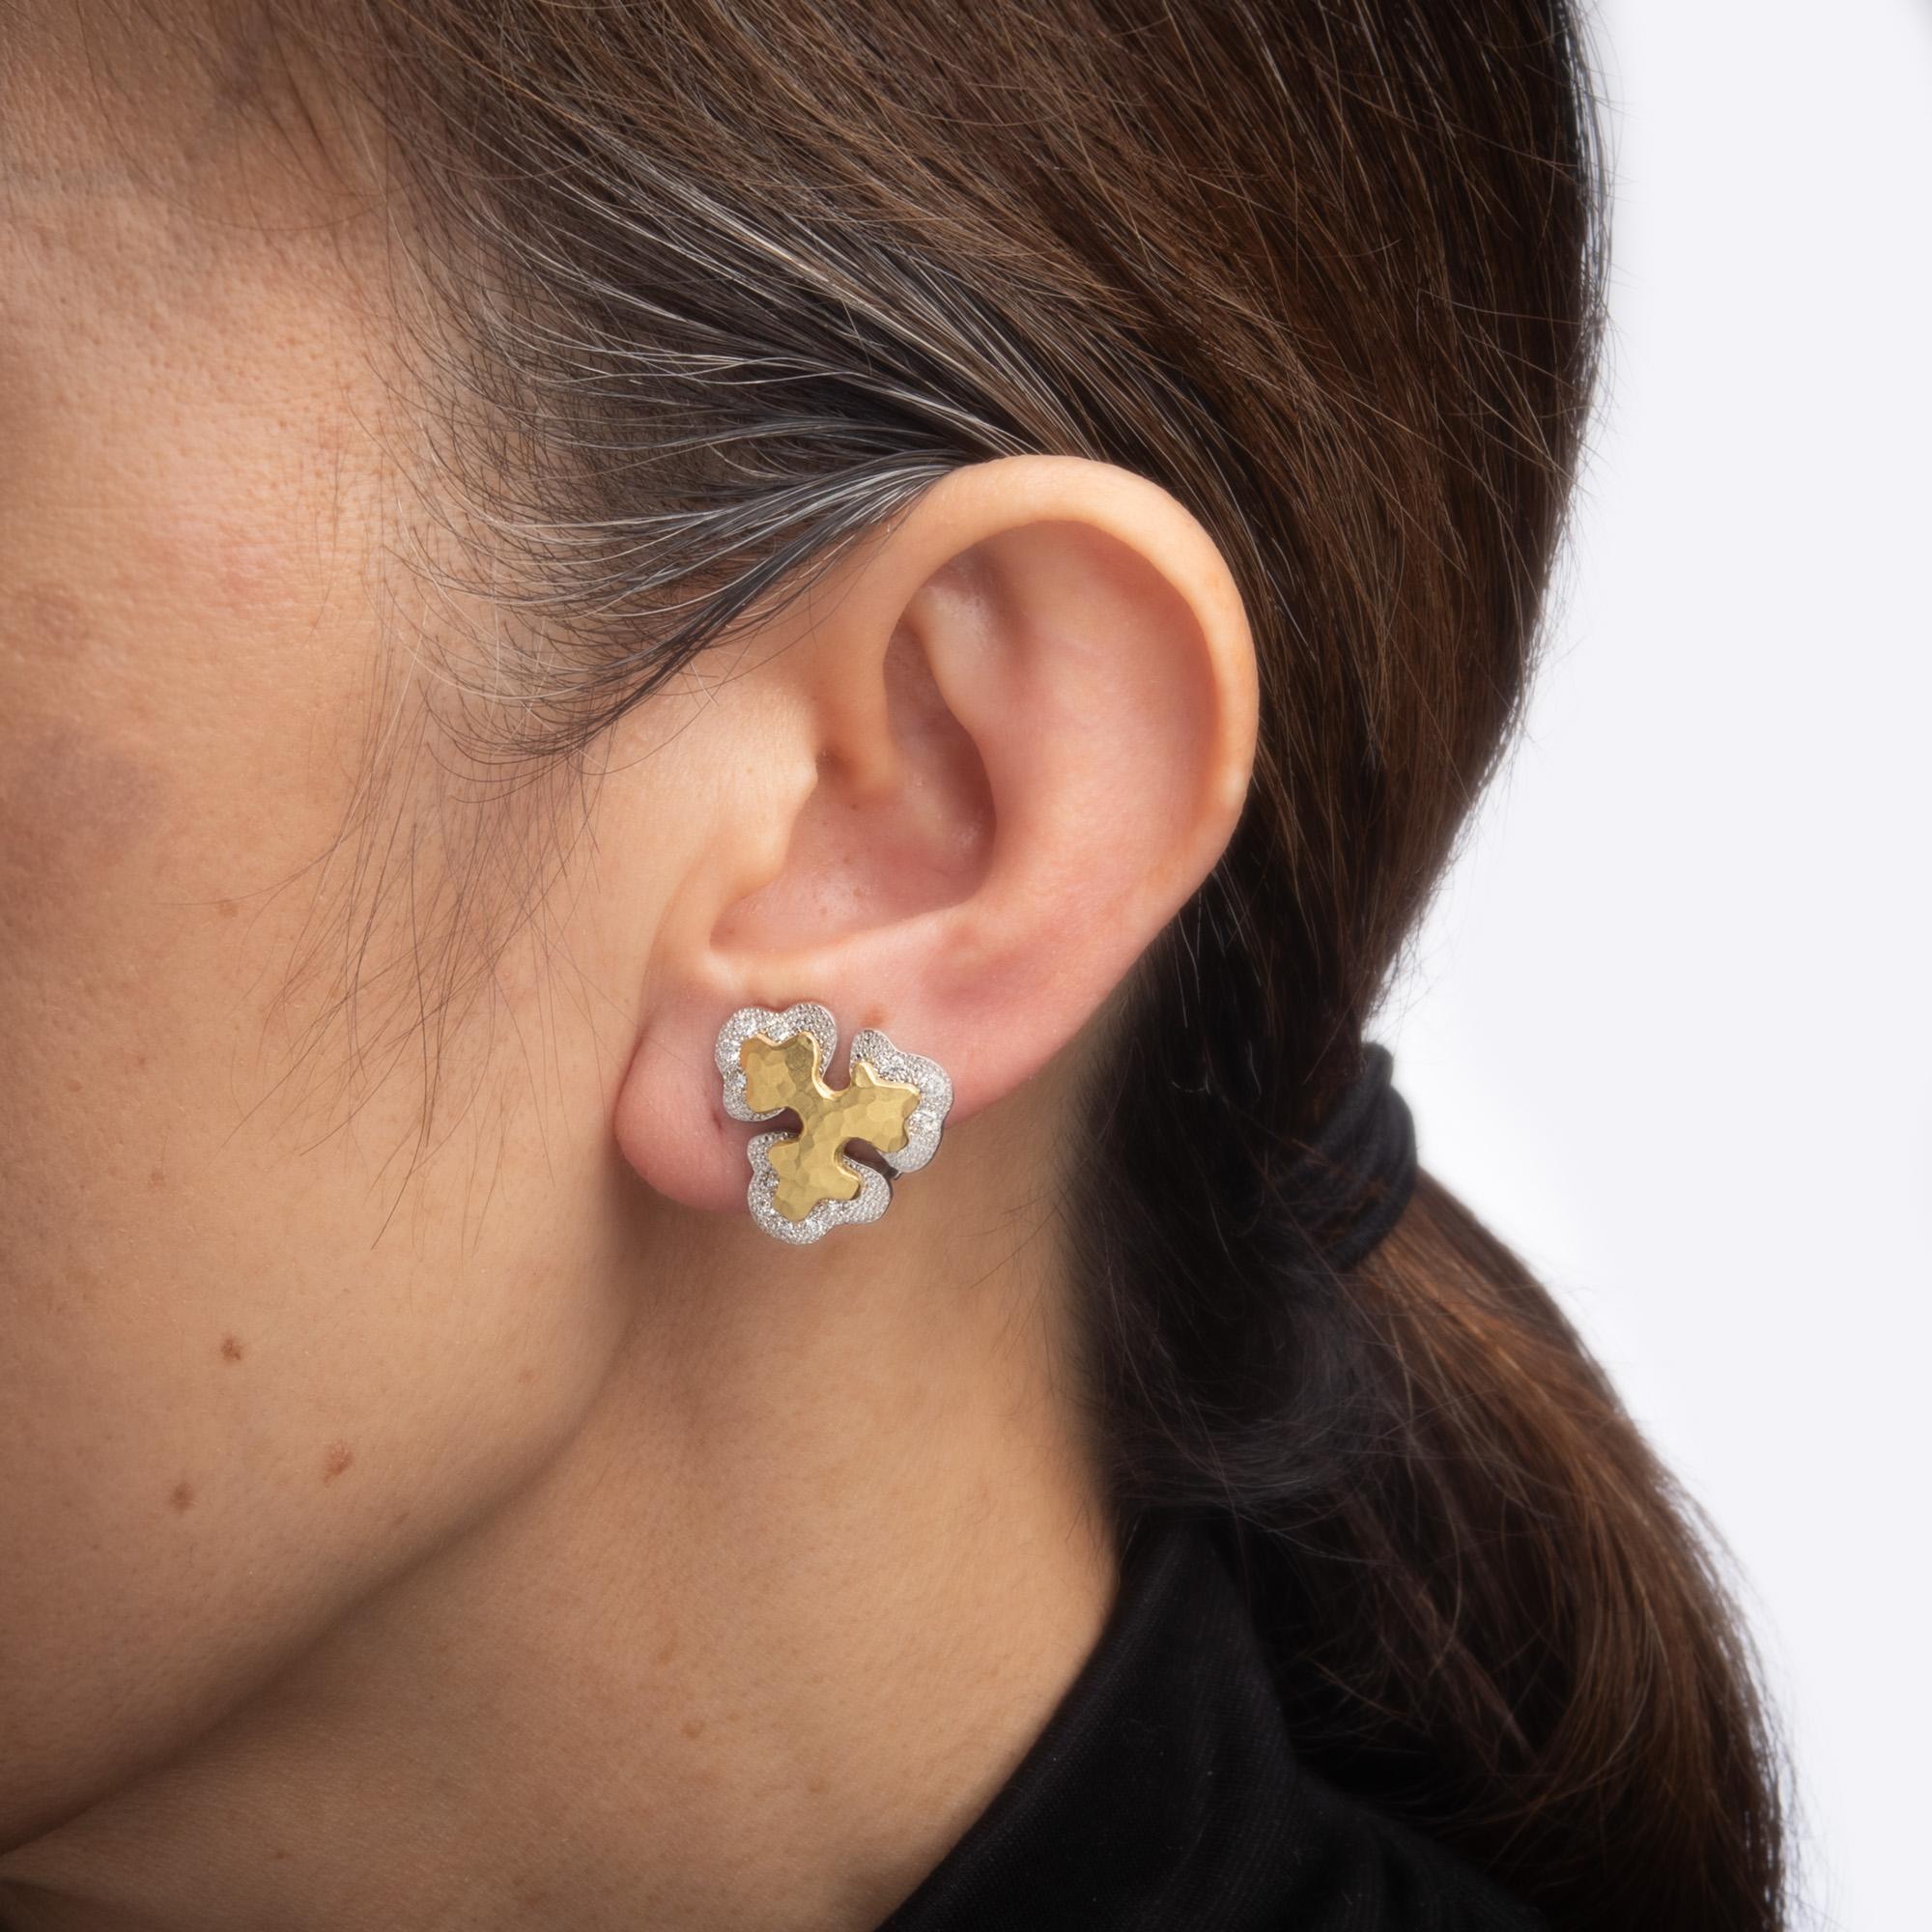 sidney garber earrings